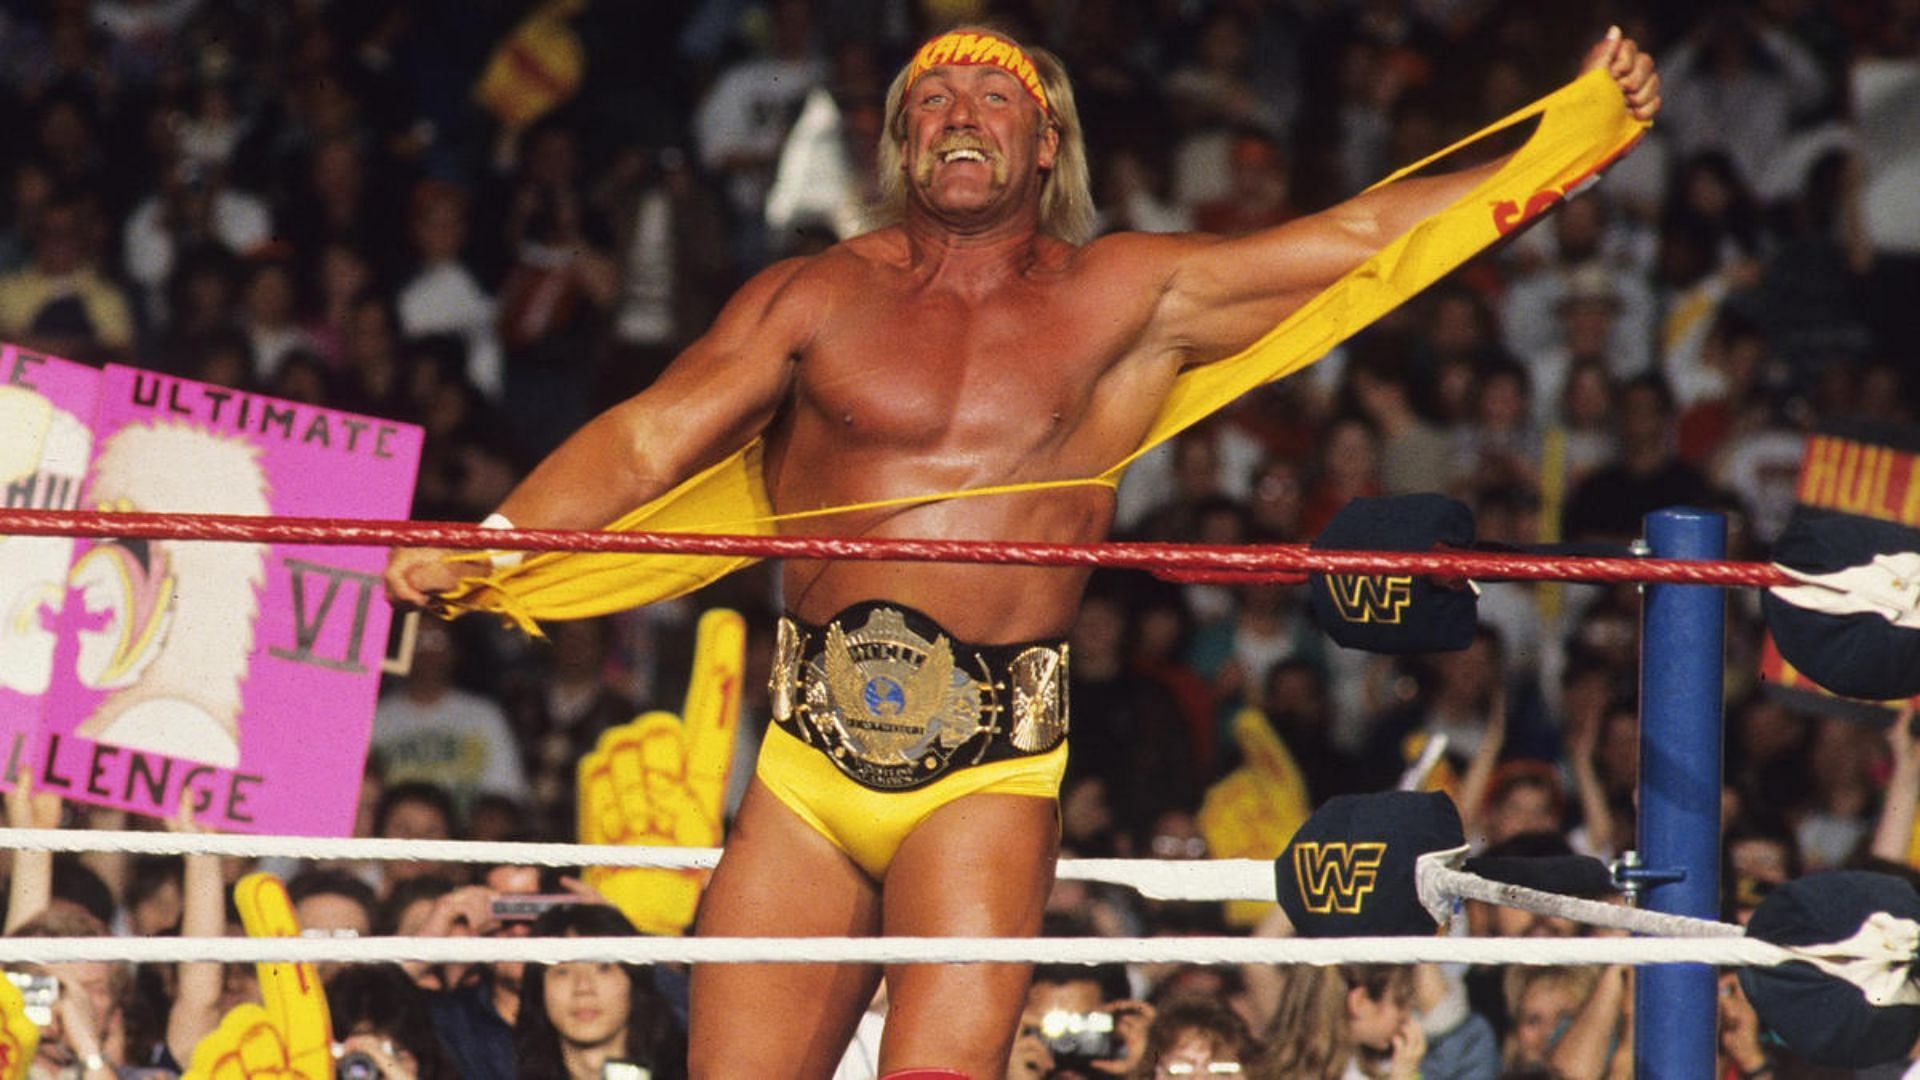 Hulk Hogan is a controversial WWE figure.